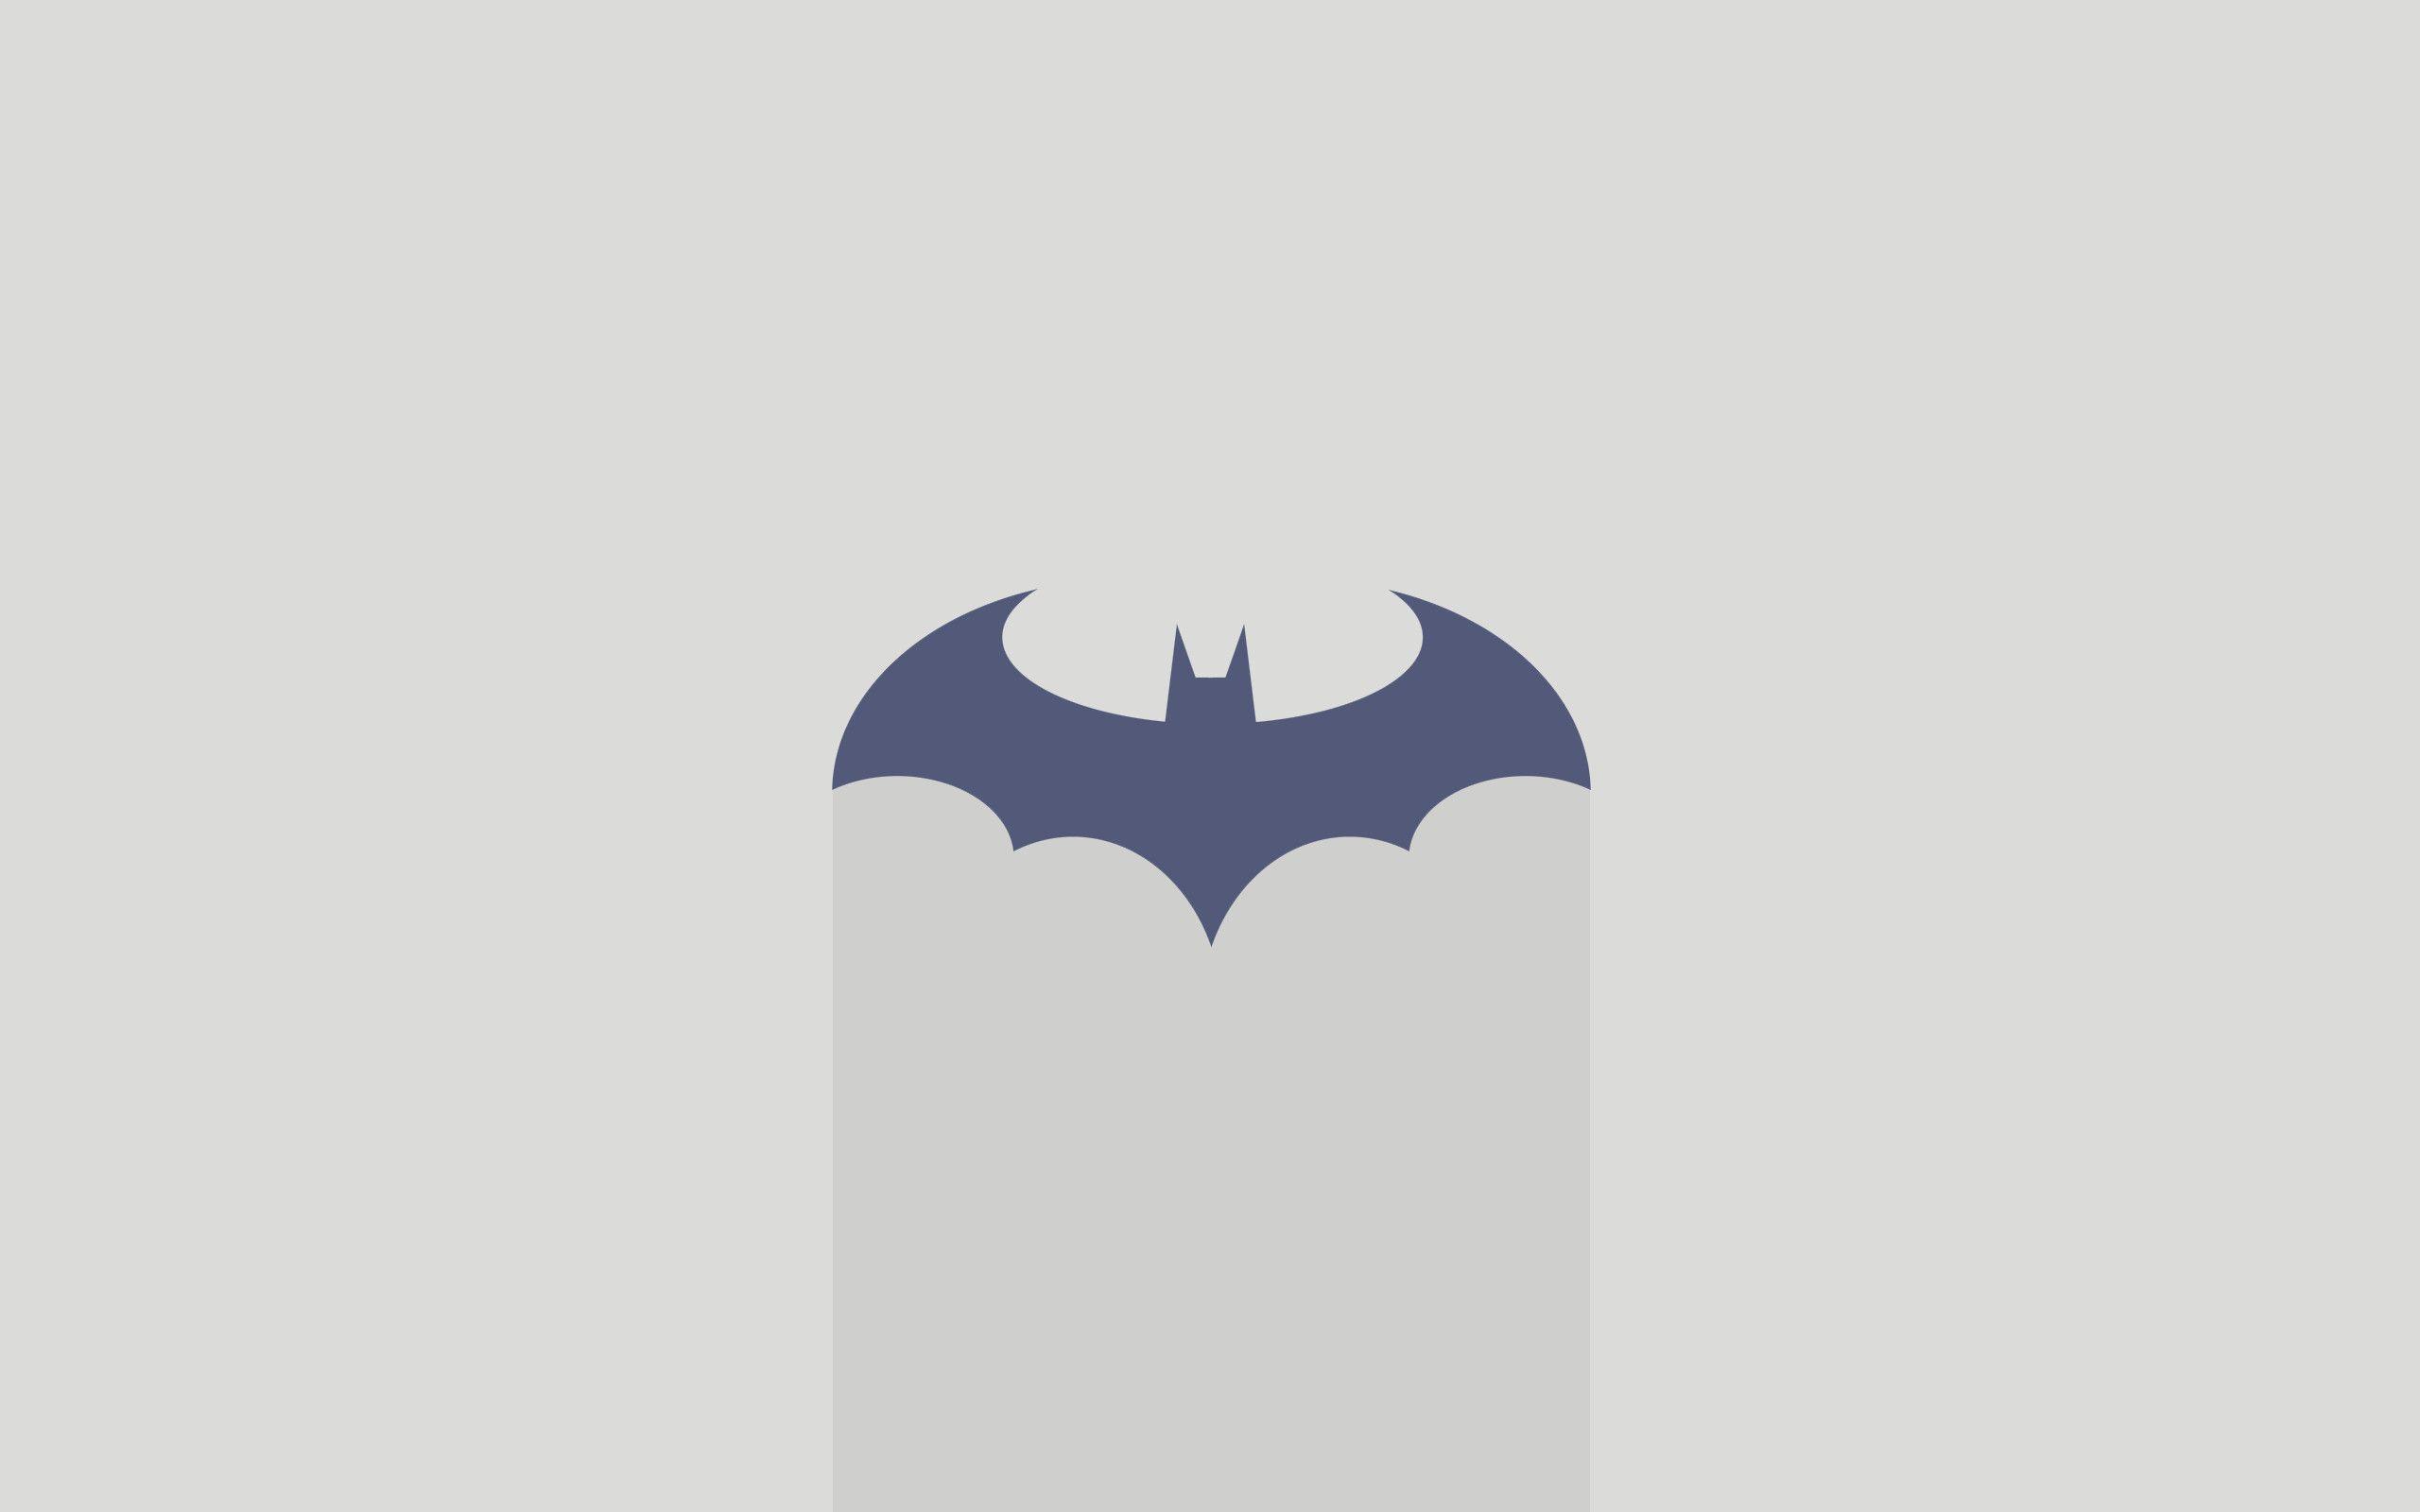 wallpaper for desktop, laptop  ab54-wallpaper-batman-face-dark-minimal